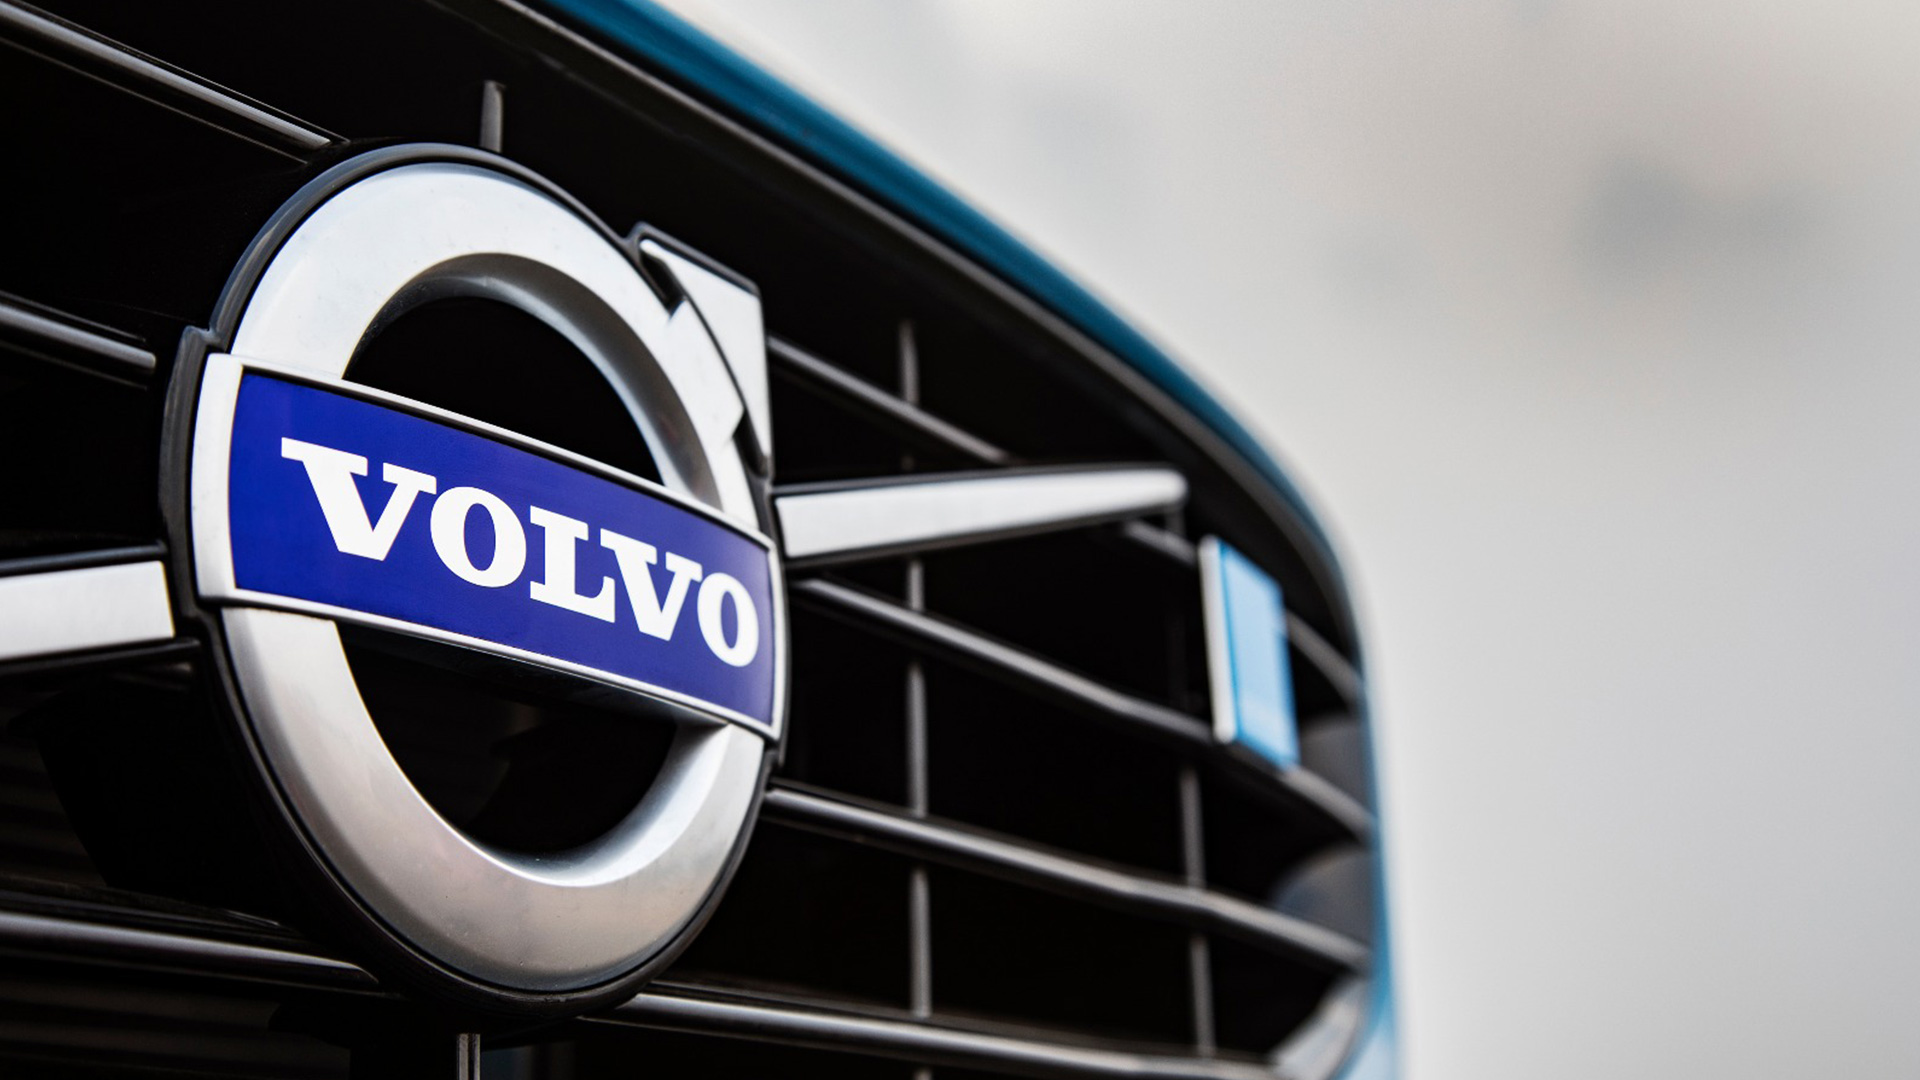 Volvo S60 2017 Polestar Exterior